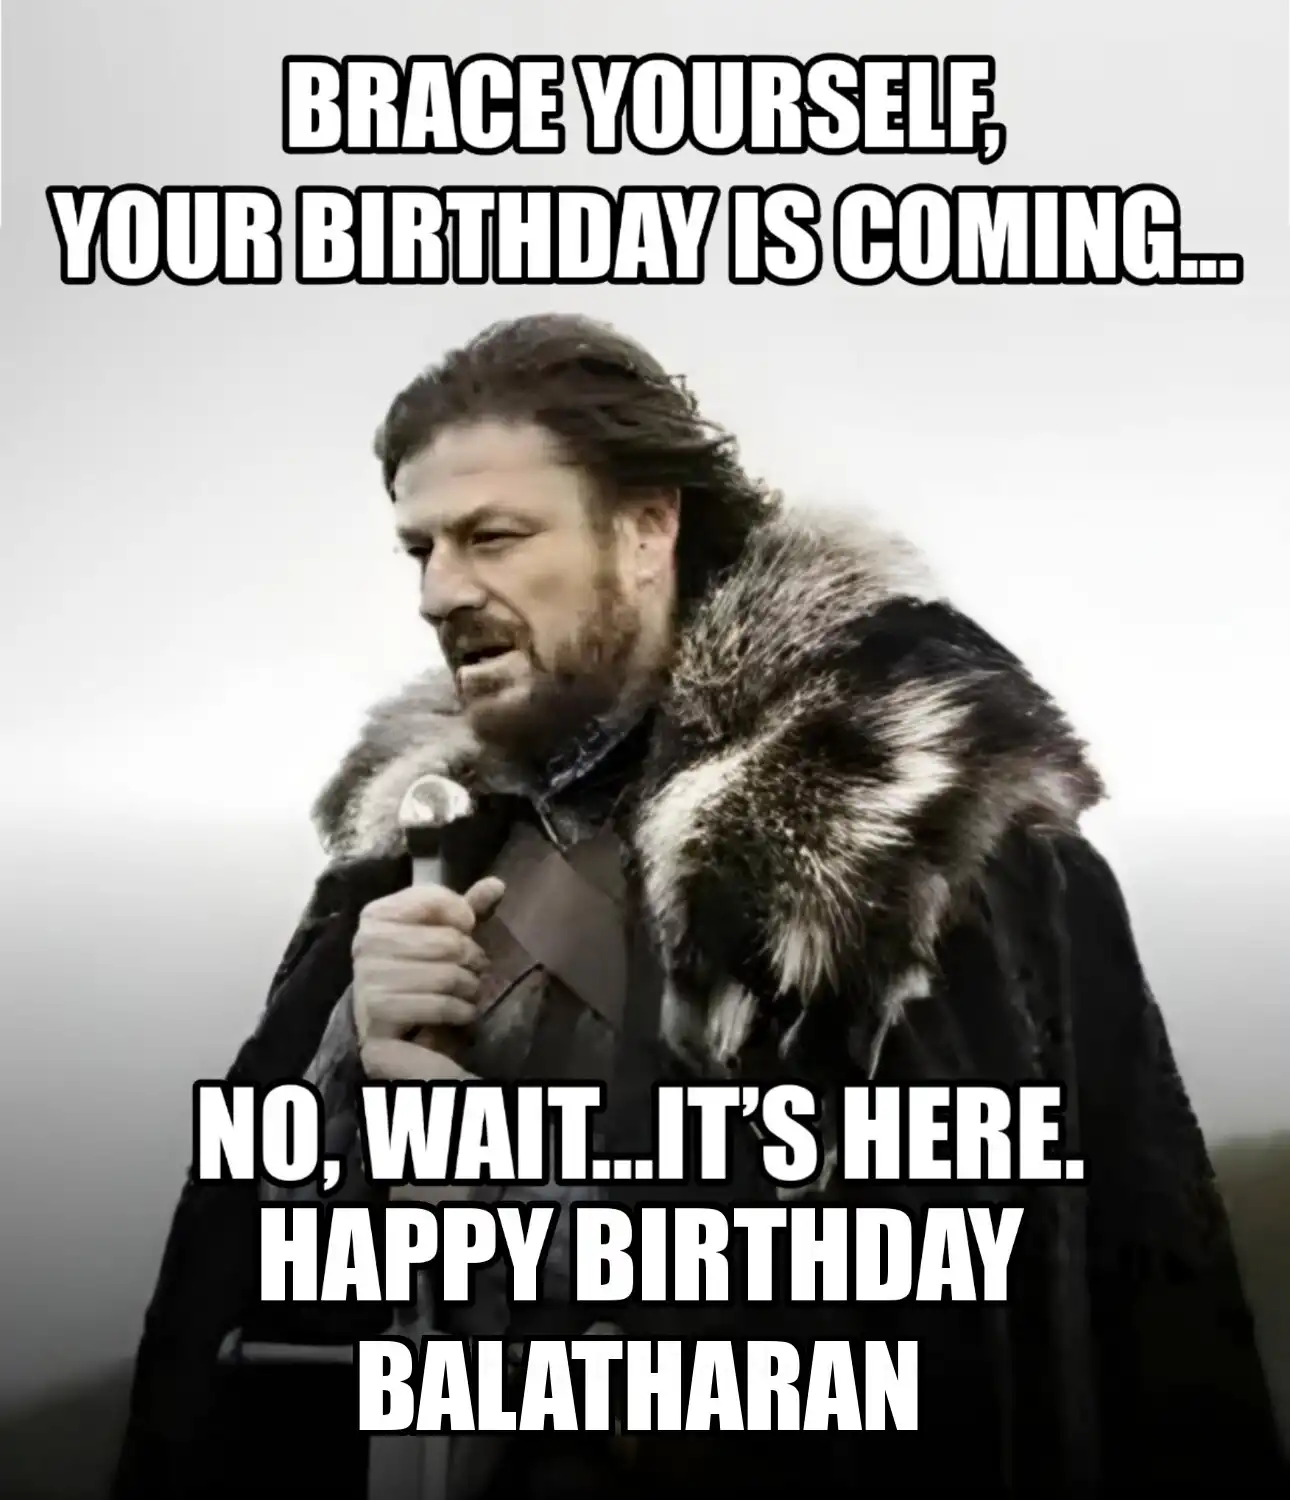 Happy Birthday Balatharan Brace Yourself Your Birthday Is Coming Meme